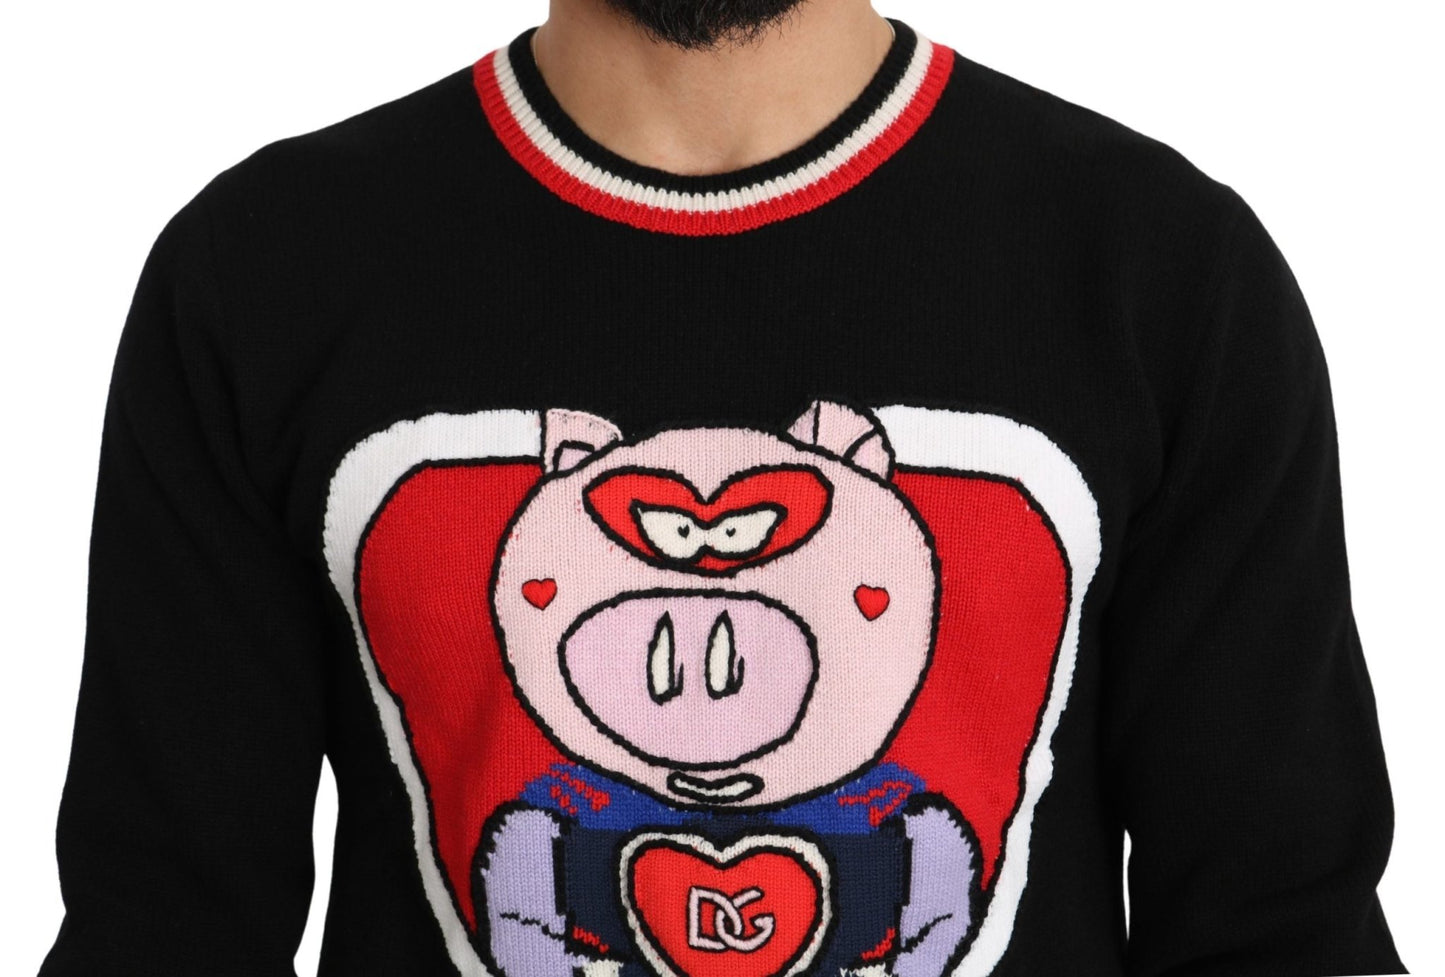 Dolce & Gabbana Elegant Black Cashmere Crew Neck Sweater